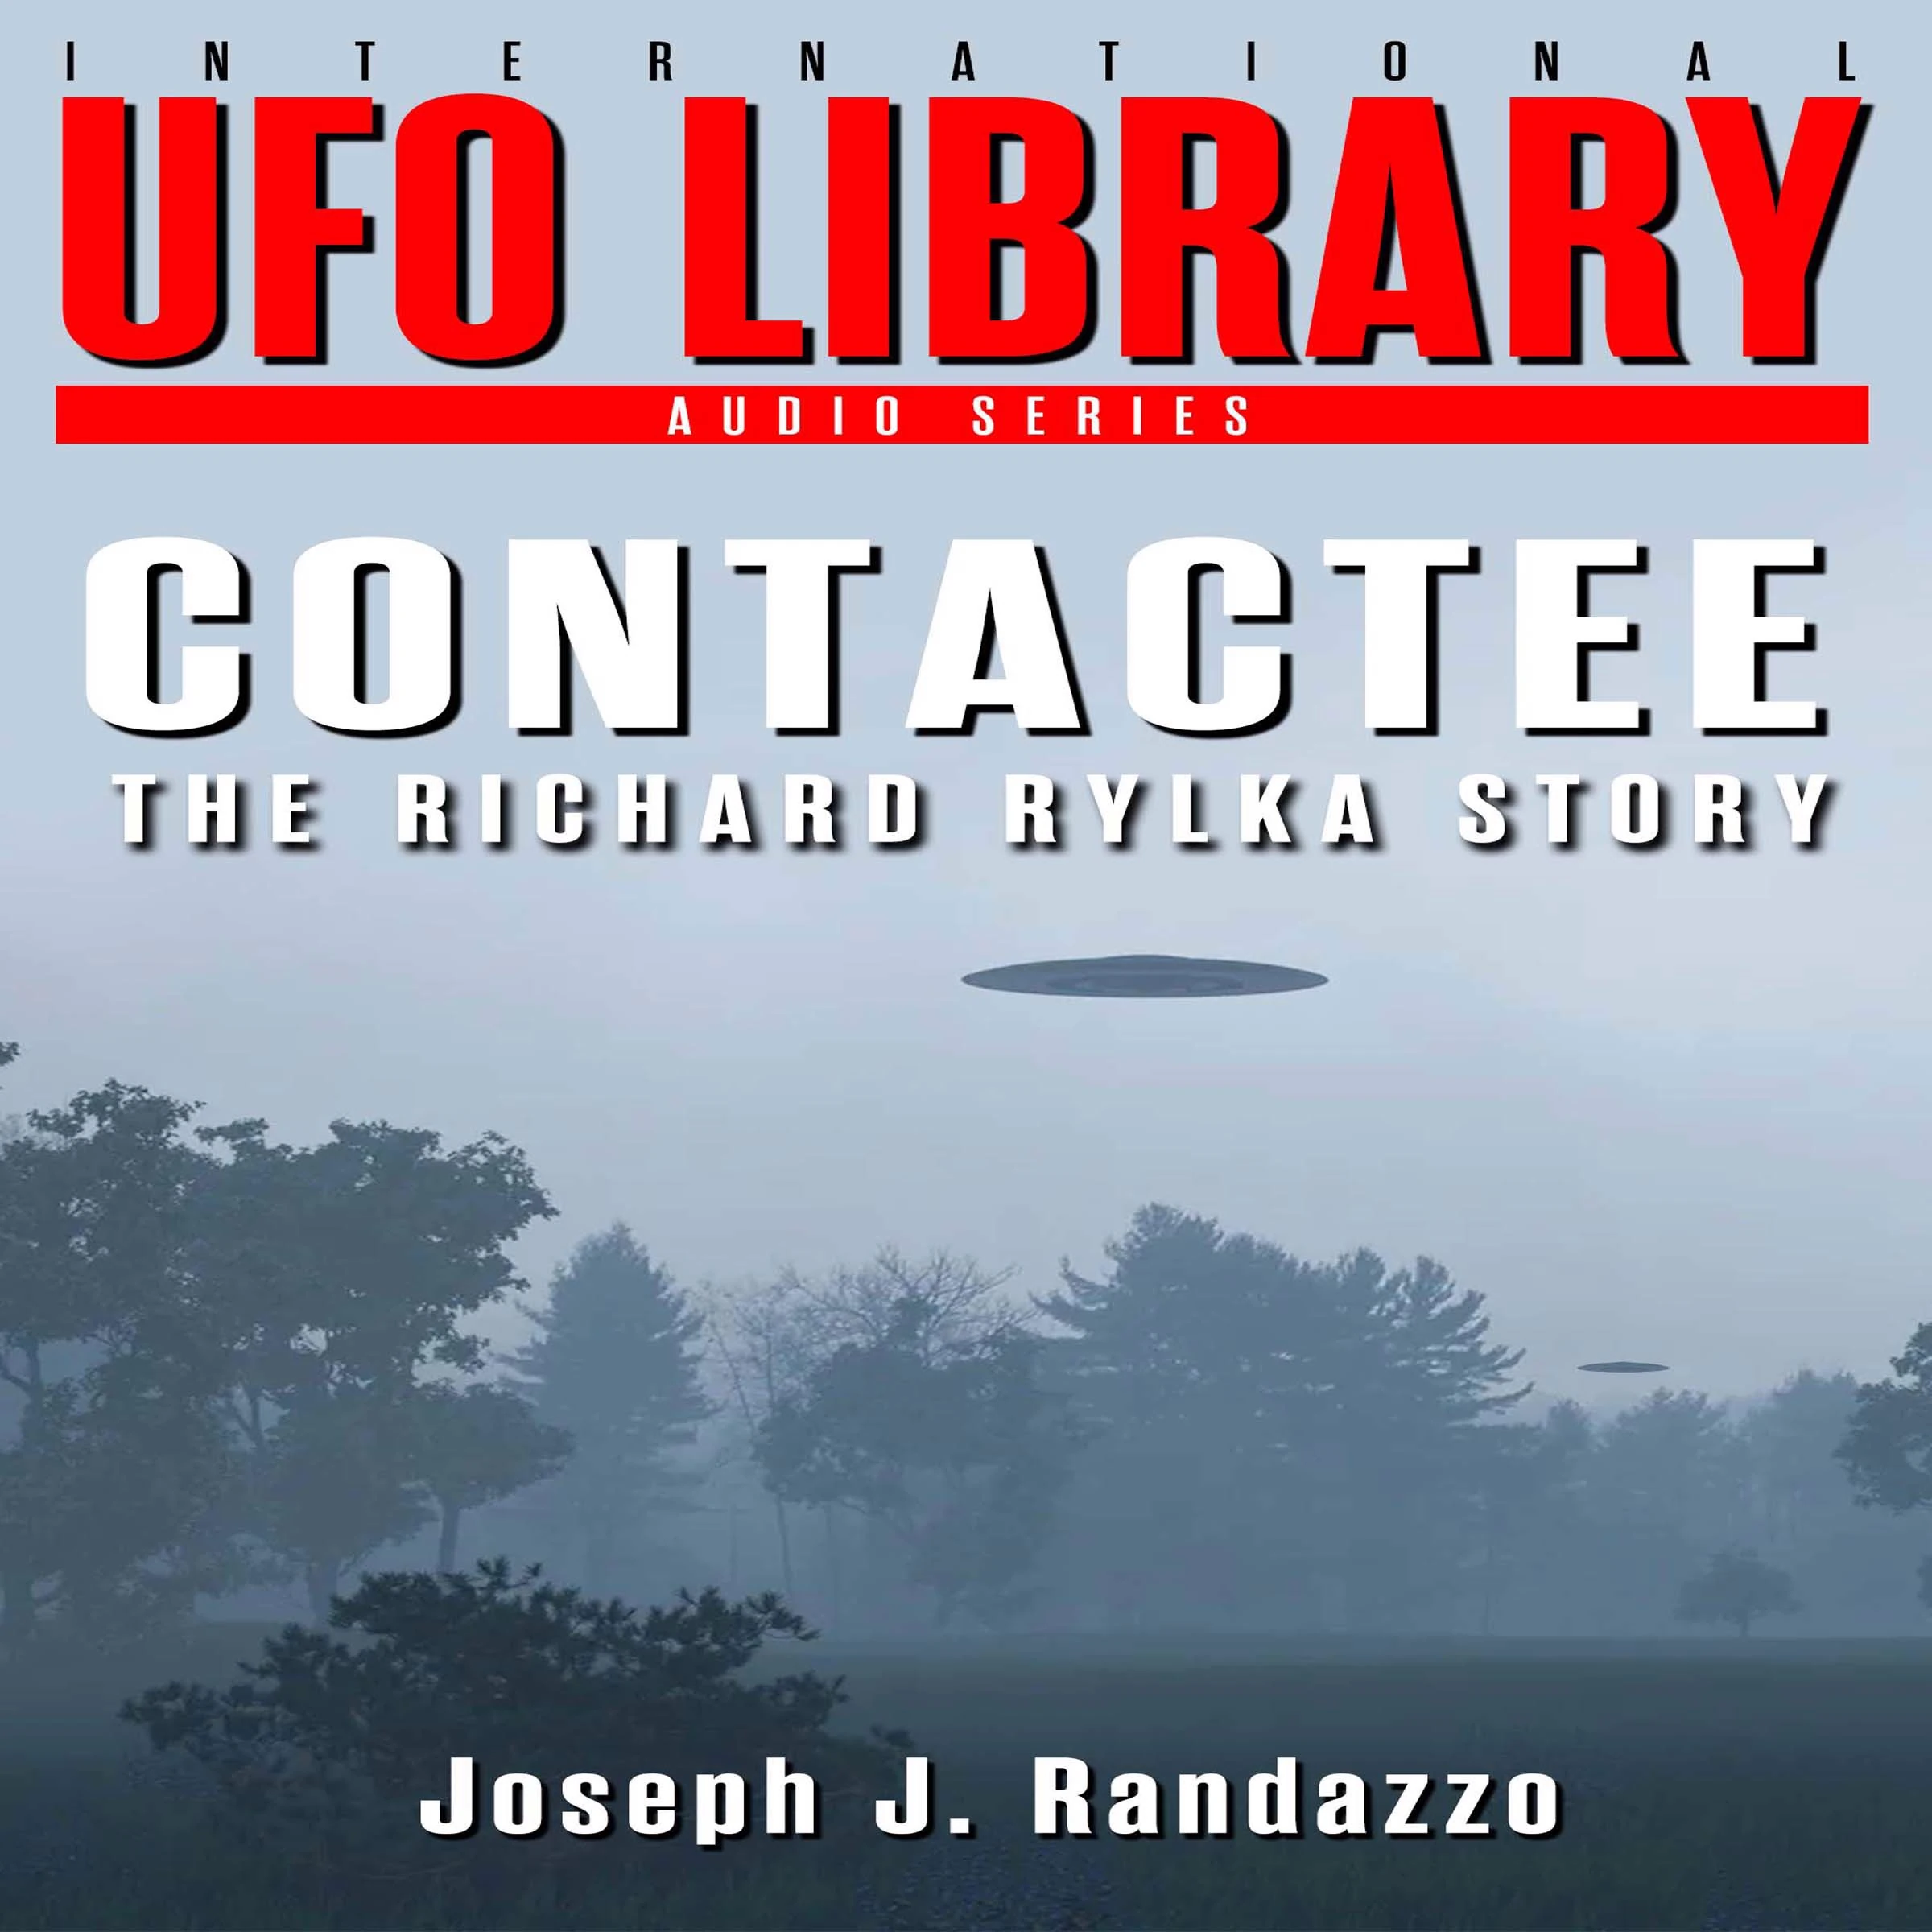 U.F.O LIBRARY - CONTACTEE: The Richard Rylka Story by Joseph J. Randazzo Audiobook